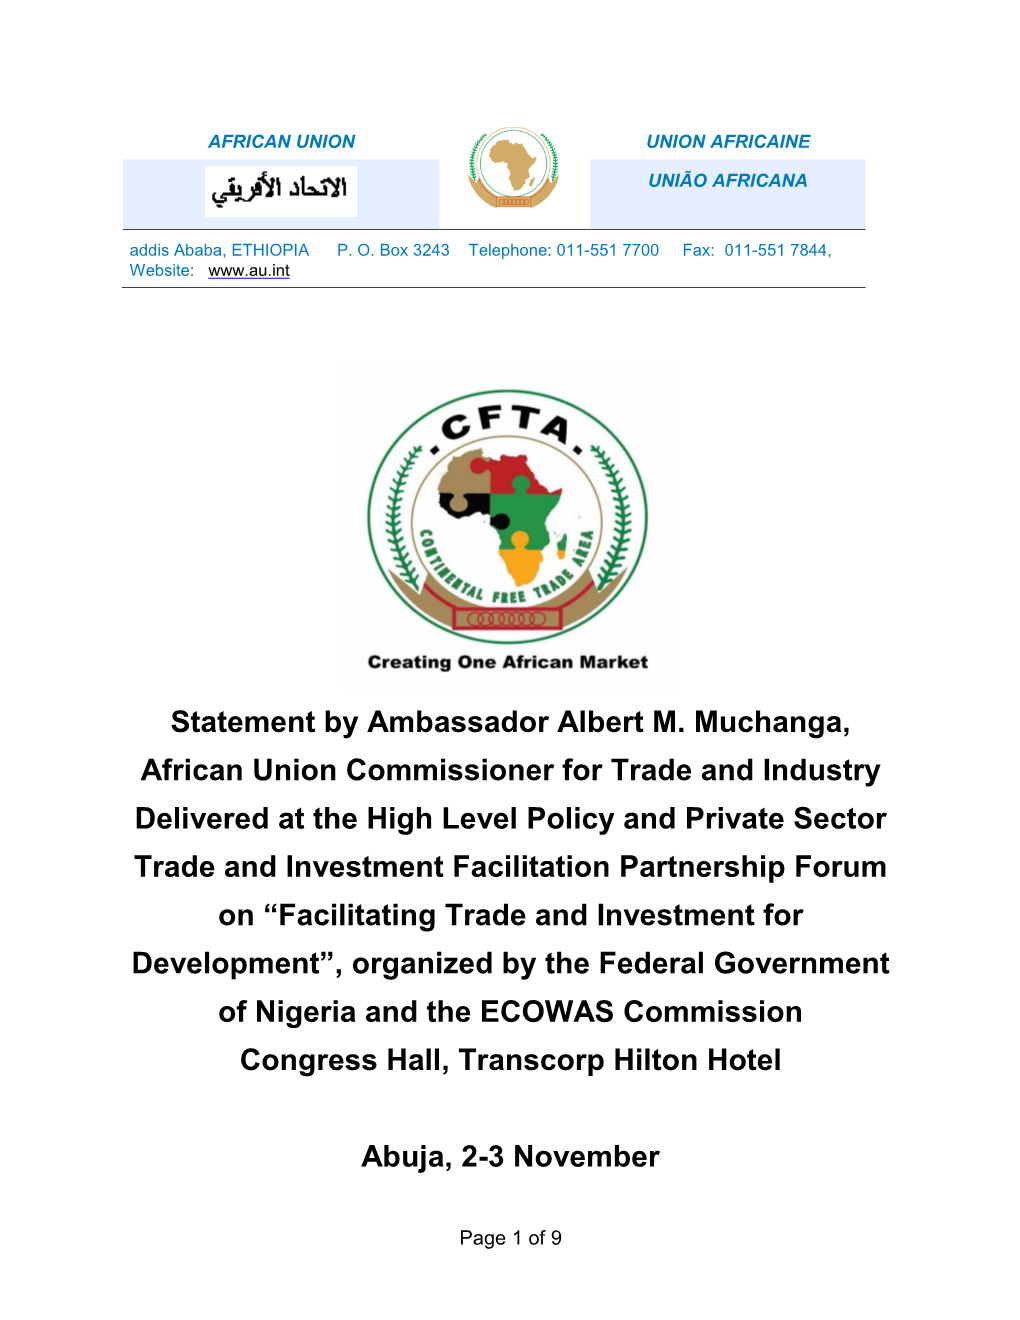 Statement by Ambassador Albert M. Muchanga, African Union